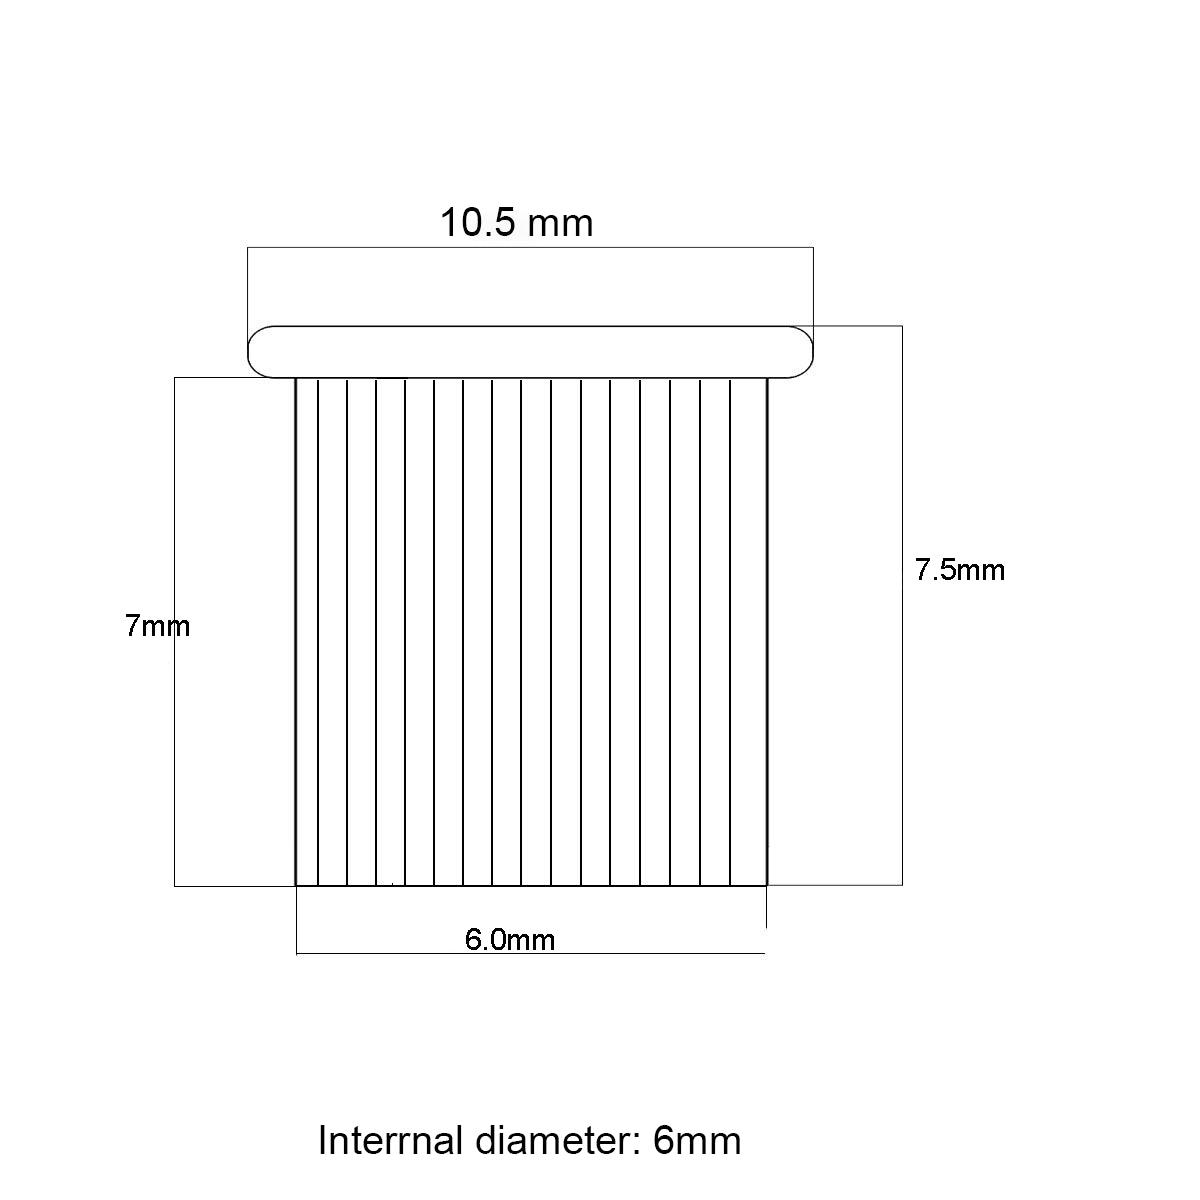 Push-fit Bushings for 8.5mm Tuner Holes (6.0mm internal Diameter)